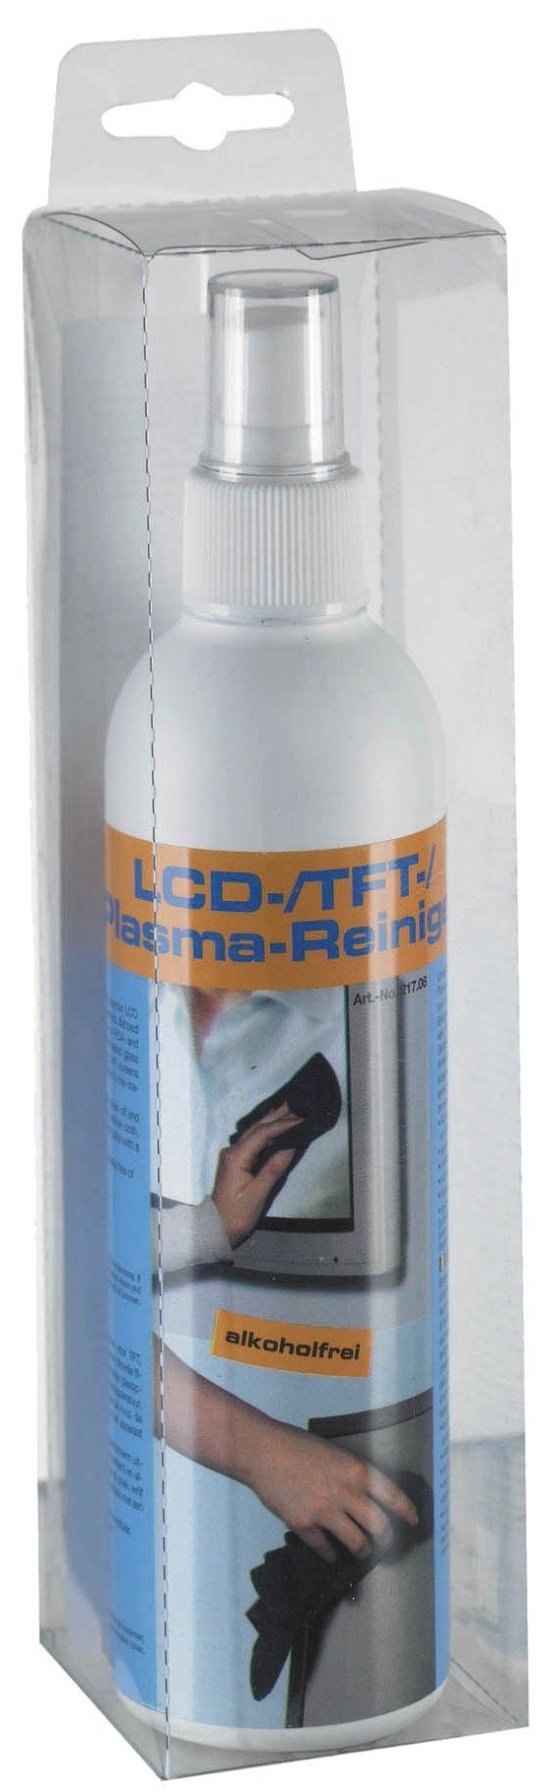 Lcd / tft / plasma Cleaning Pumpspray - Lcd / tft / plasma Cleaning Pumpspray 250ml - Beco (AVACC) - Lcd / tft / plasma Cleaning Pumpspray - Mercancía - Beco - 4000976217064 - 